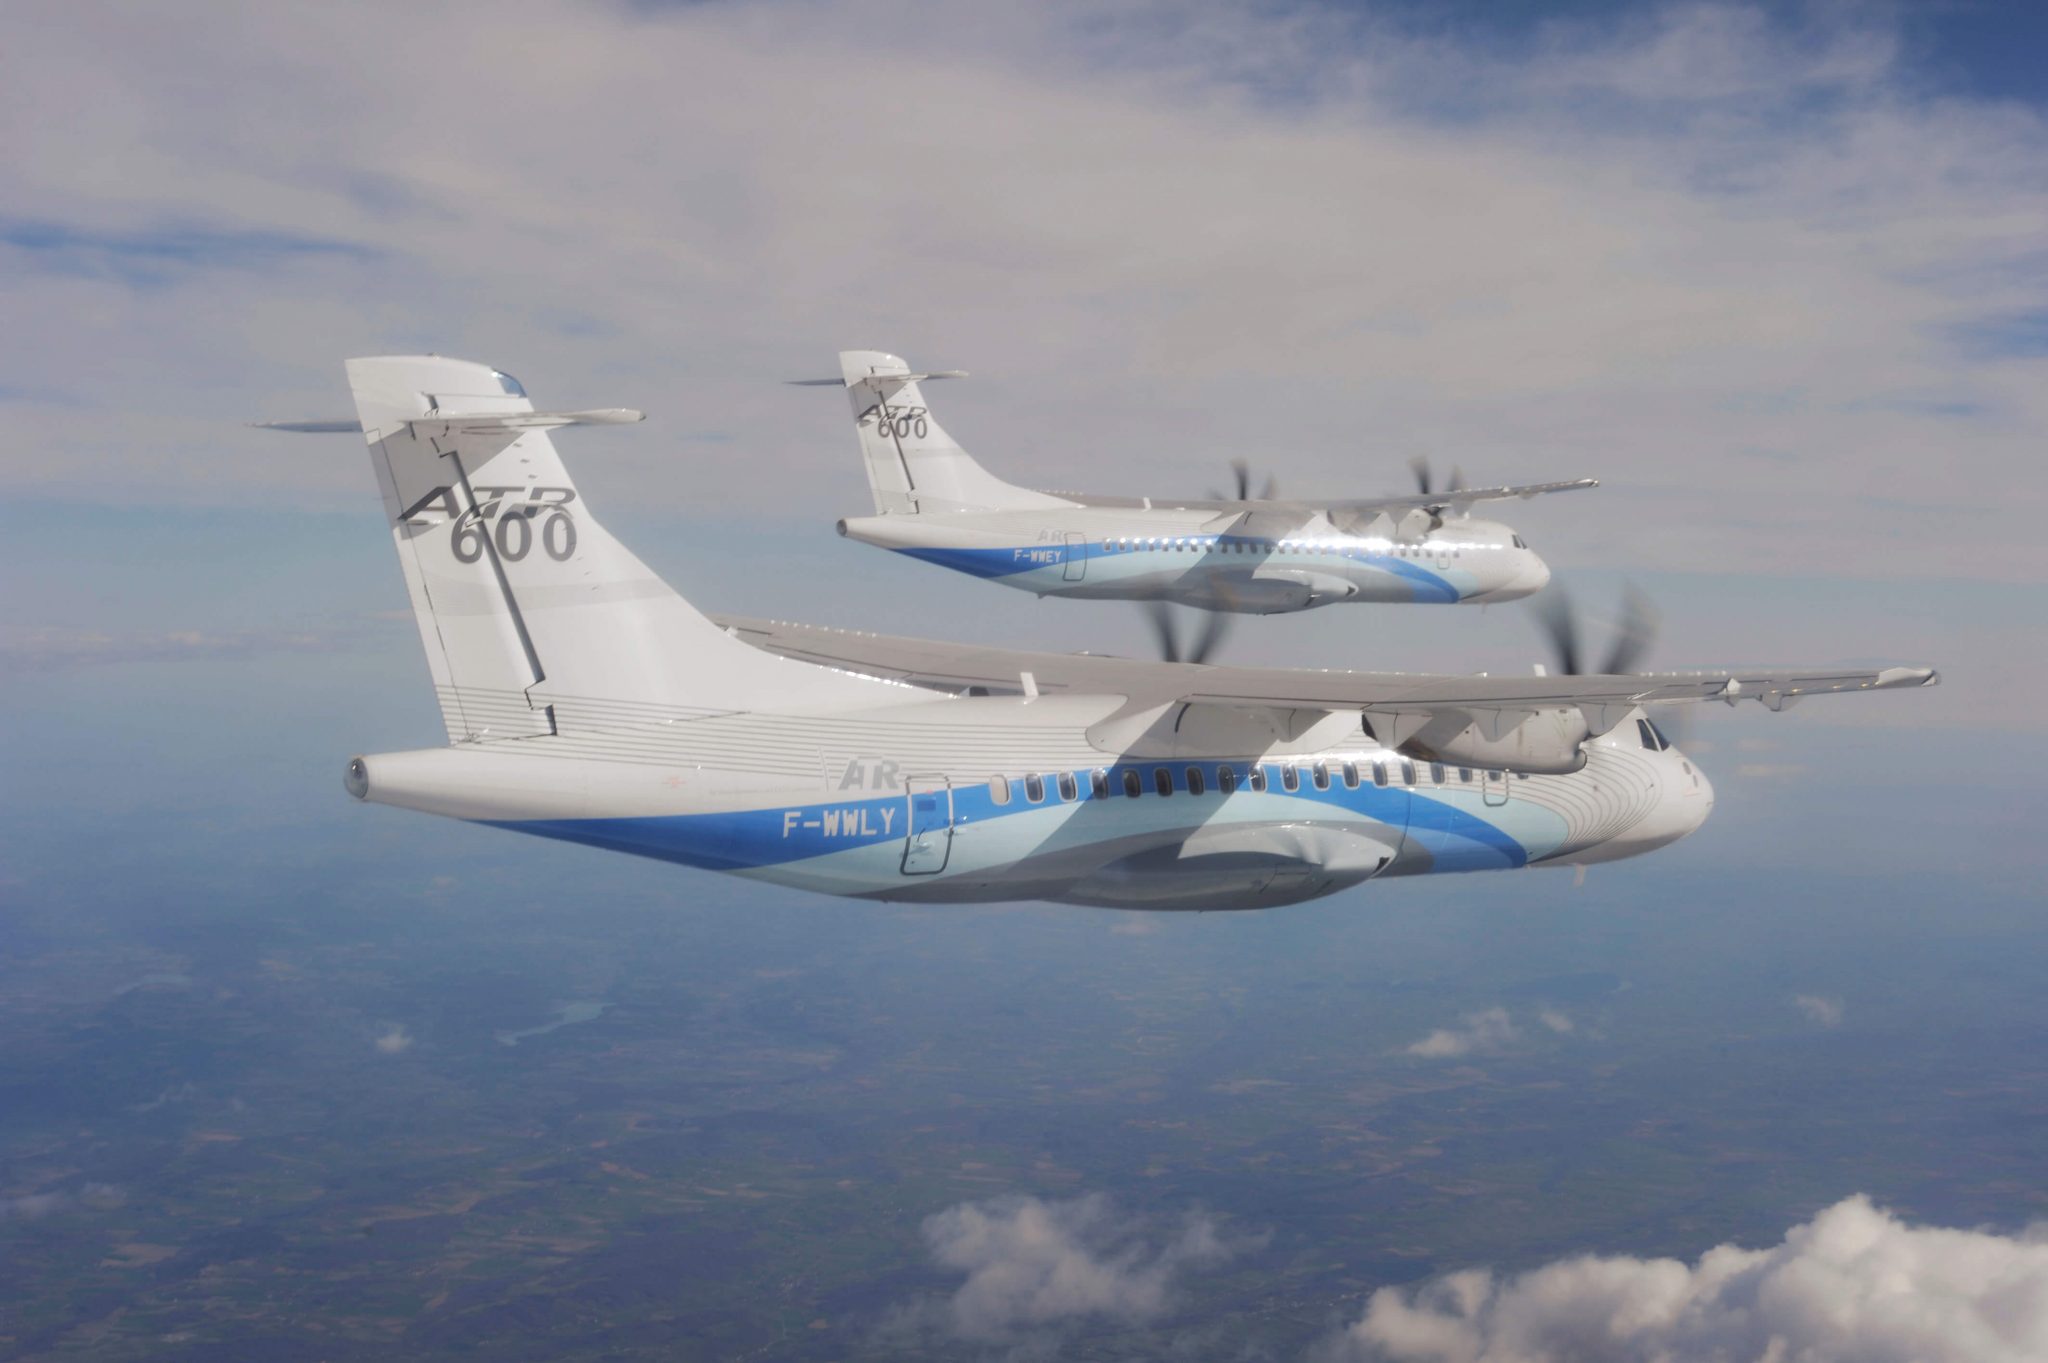 ATR obtains EASA certification for the new Standard 3 avionics for the ATR -600 series